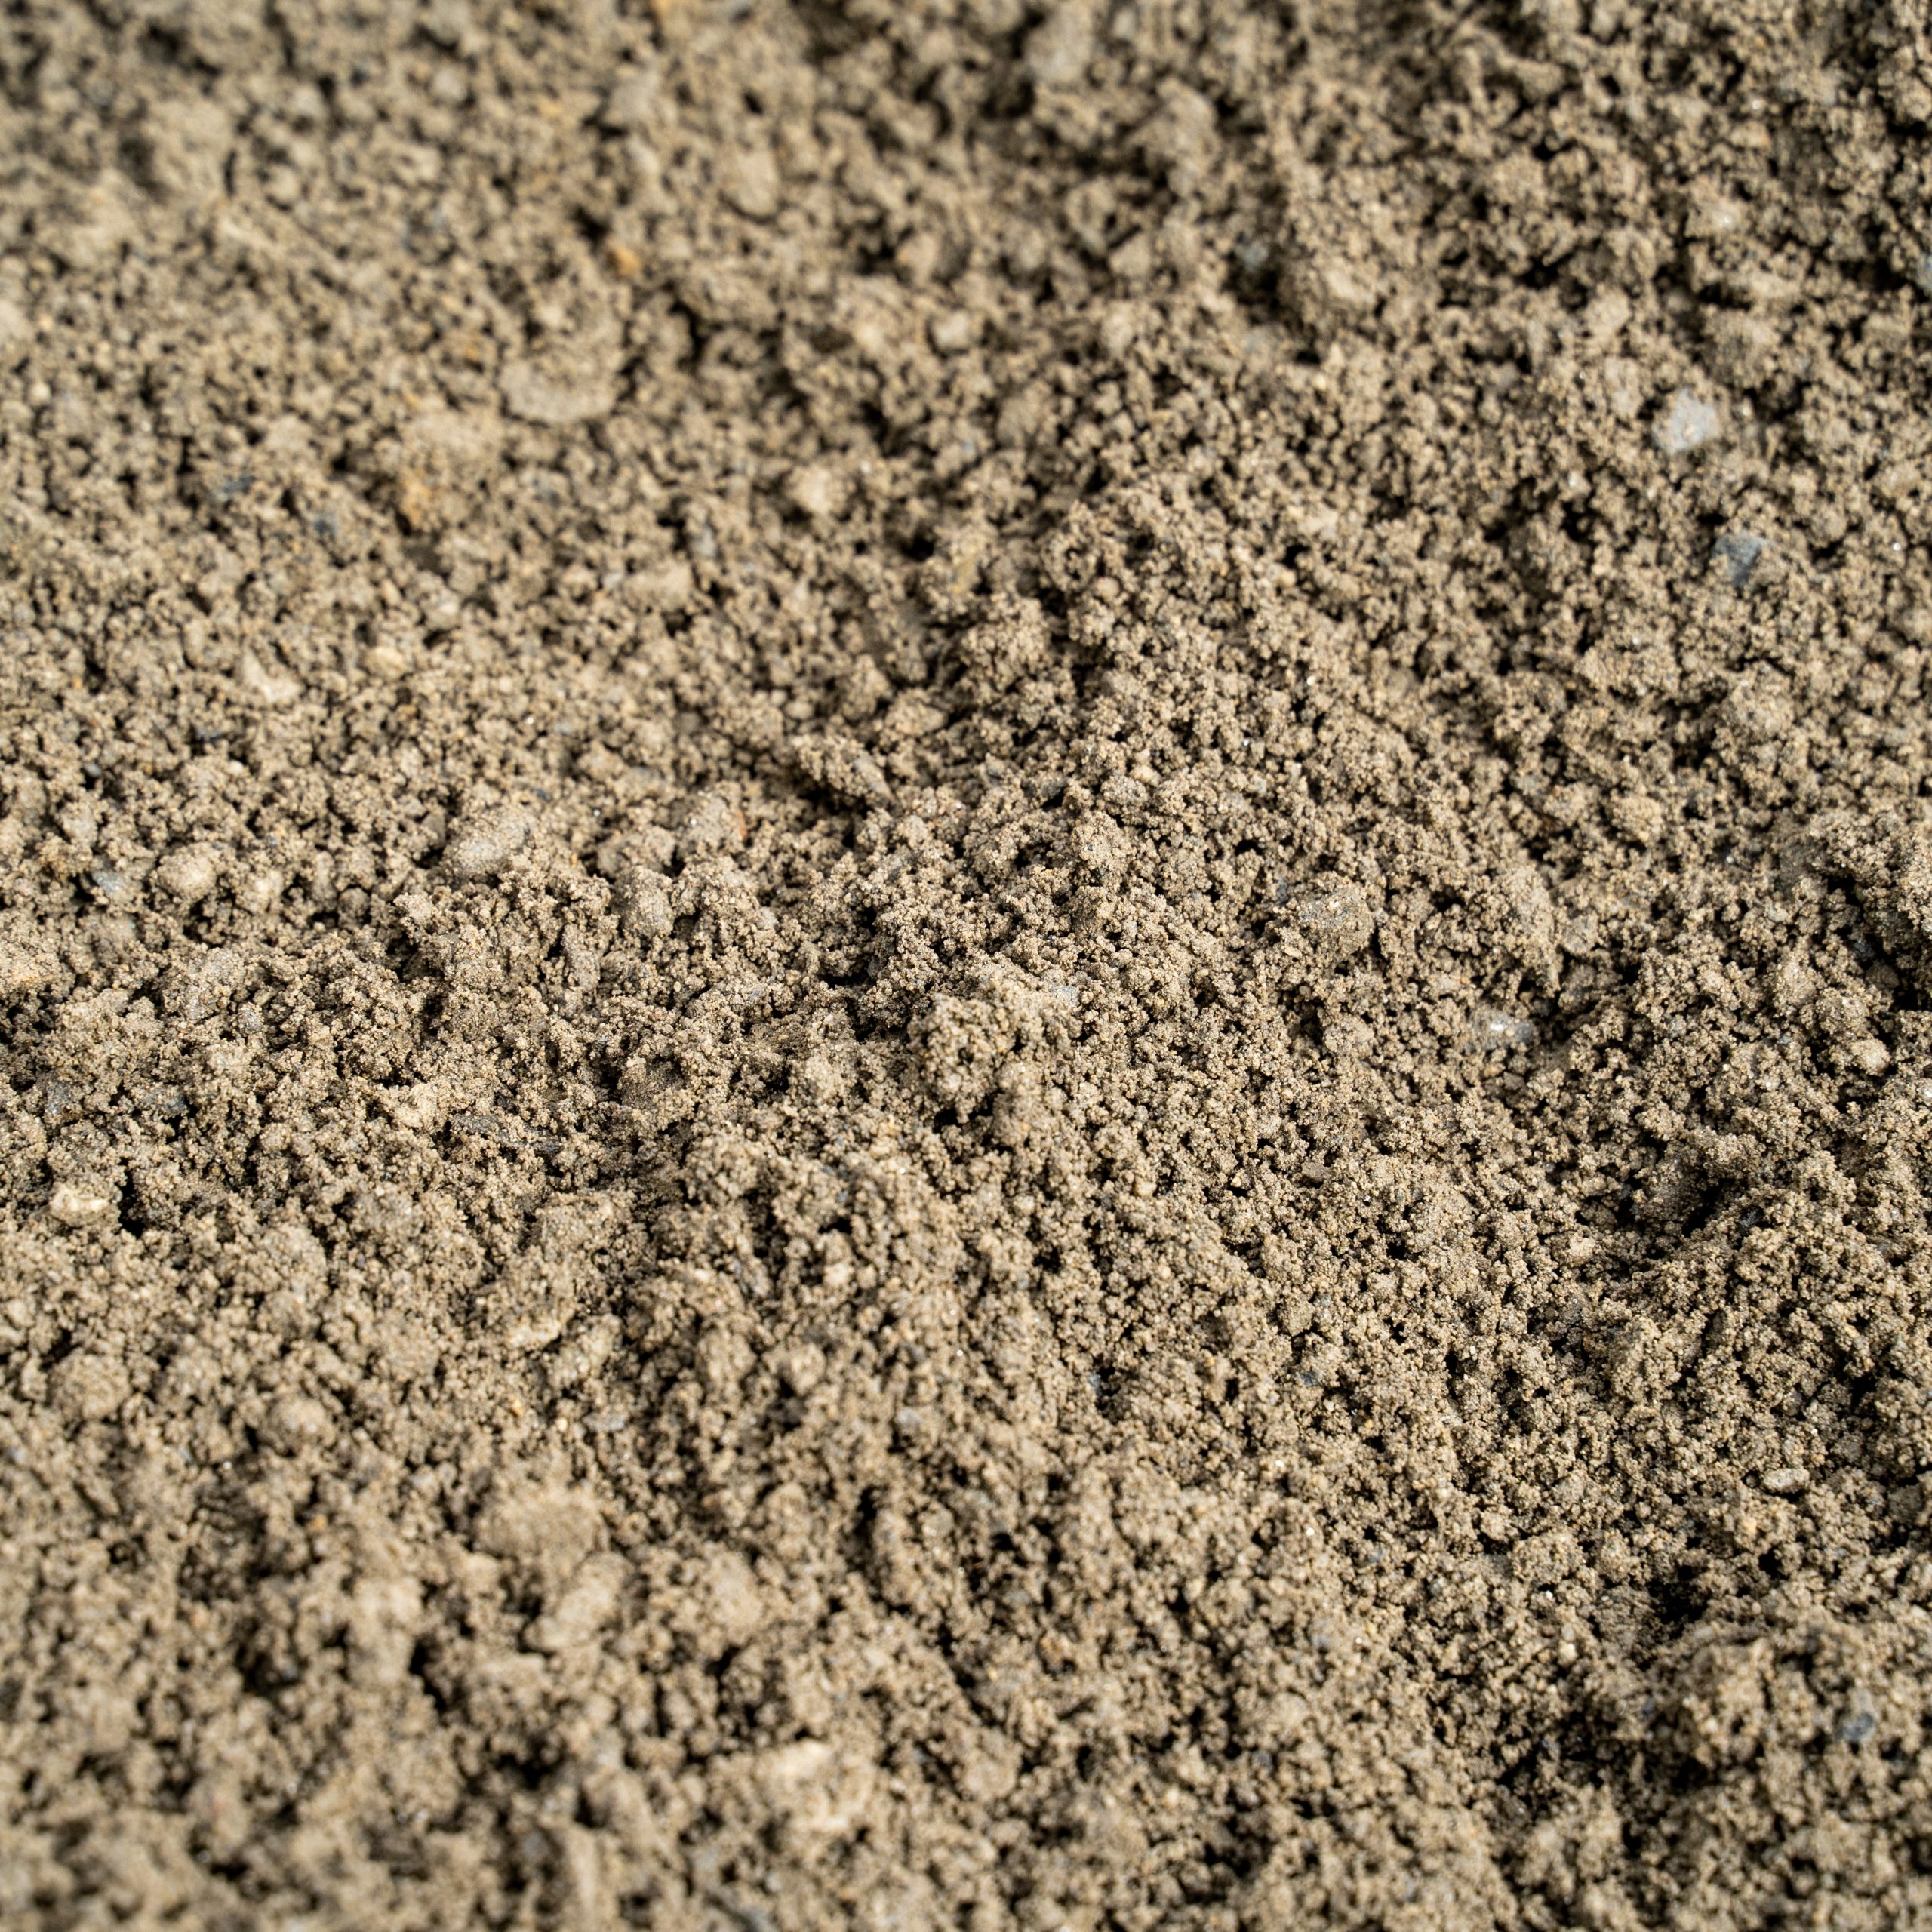 Grit Sand – Loose